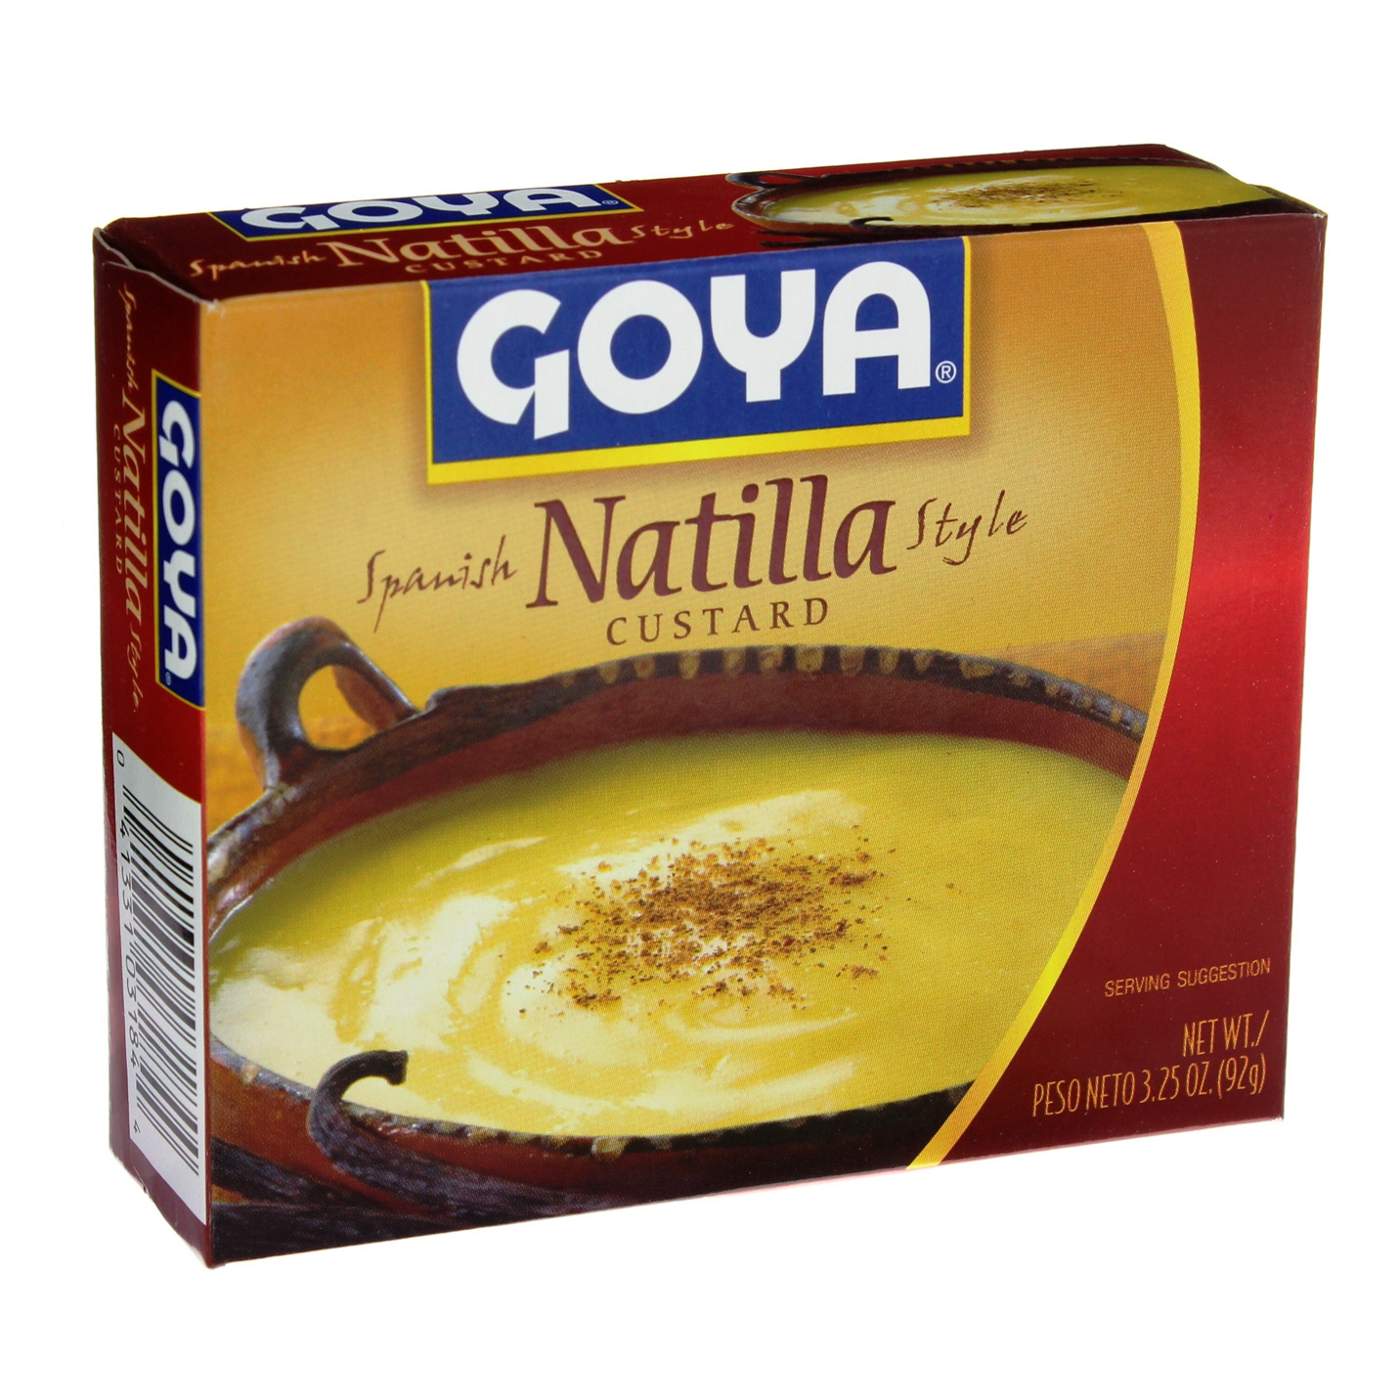 Goya Natilla Custard; image 1 of 2